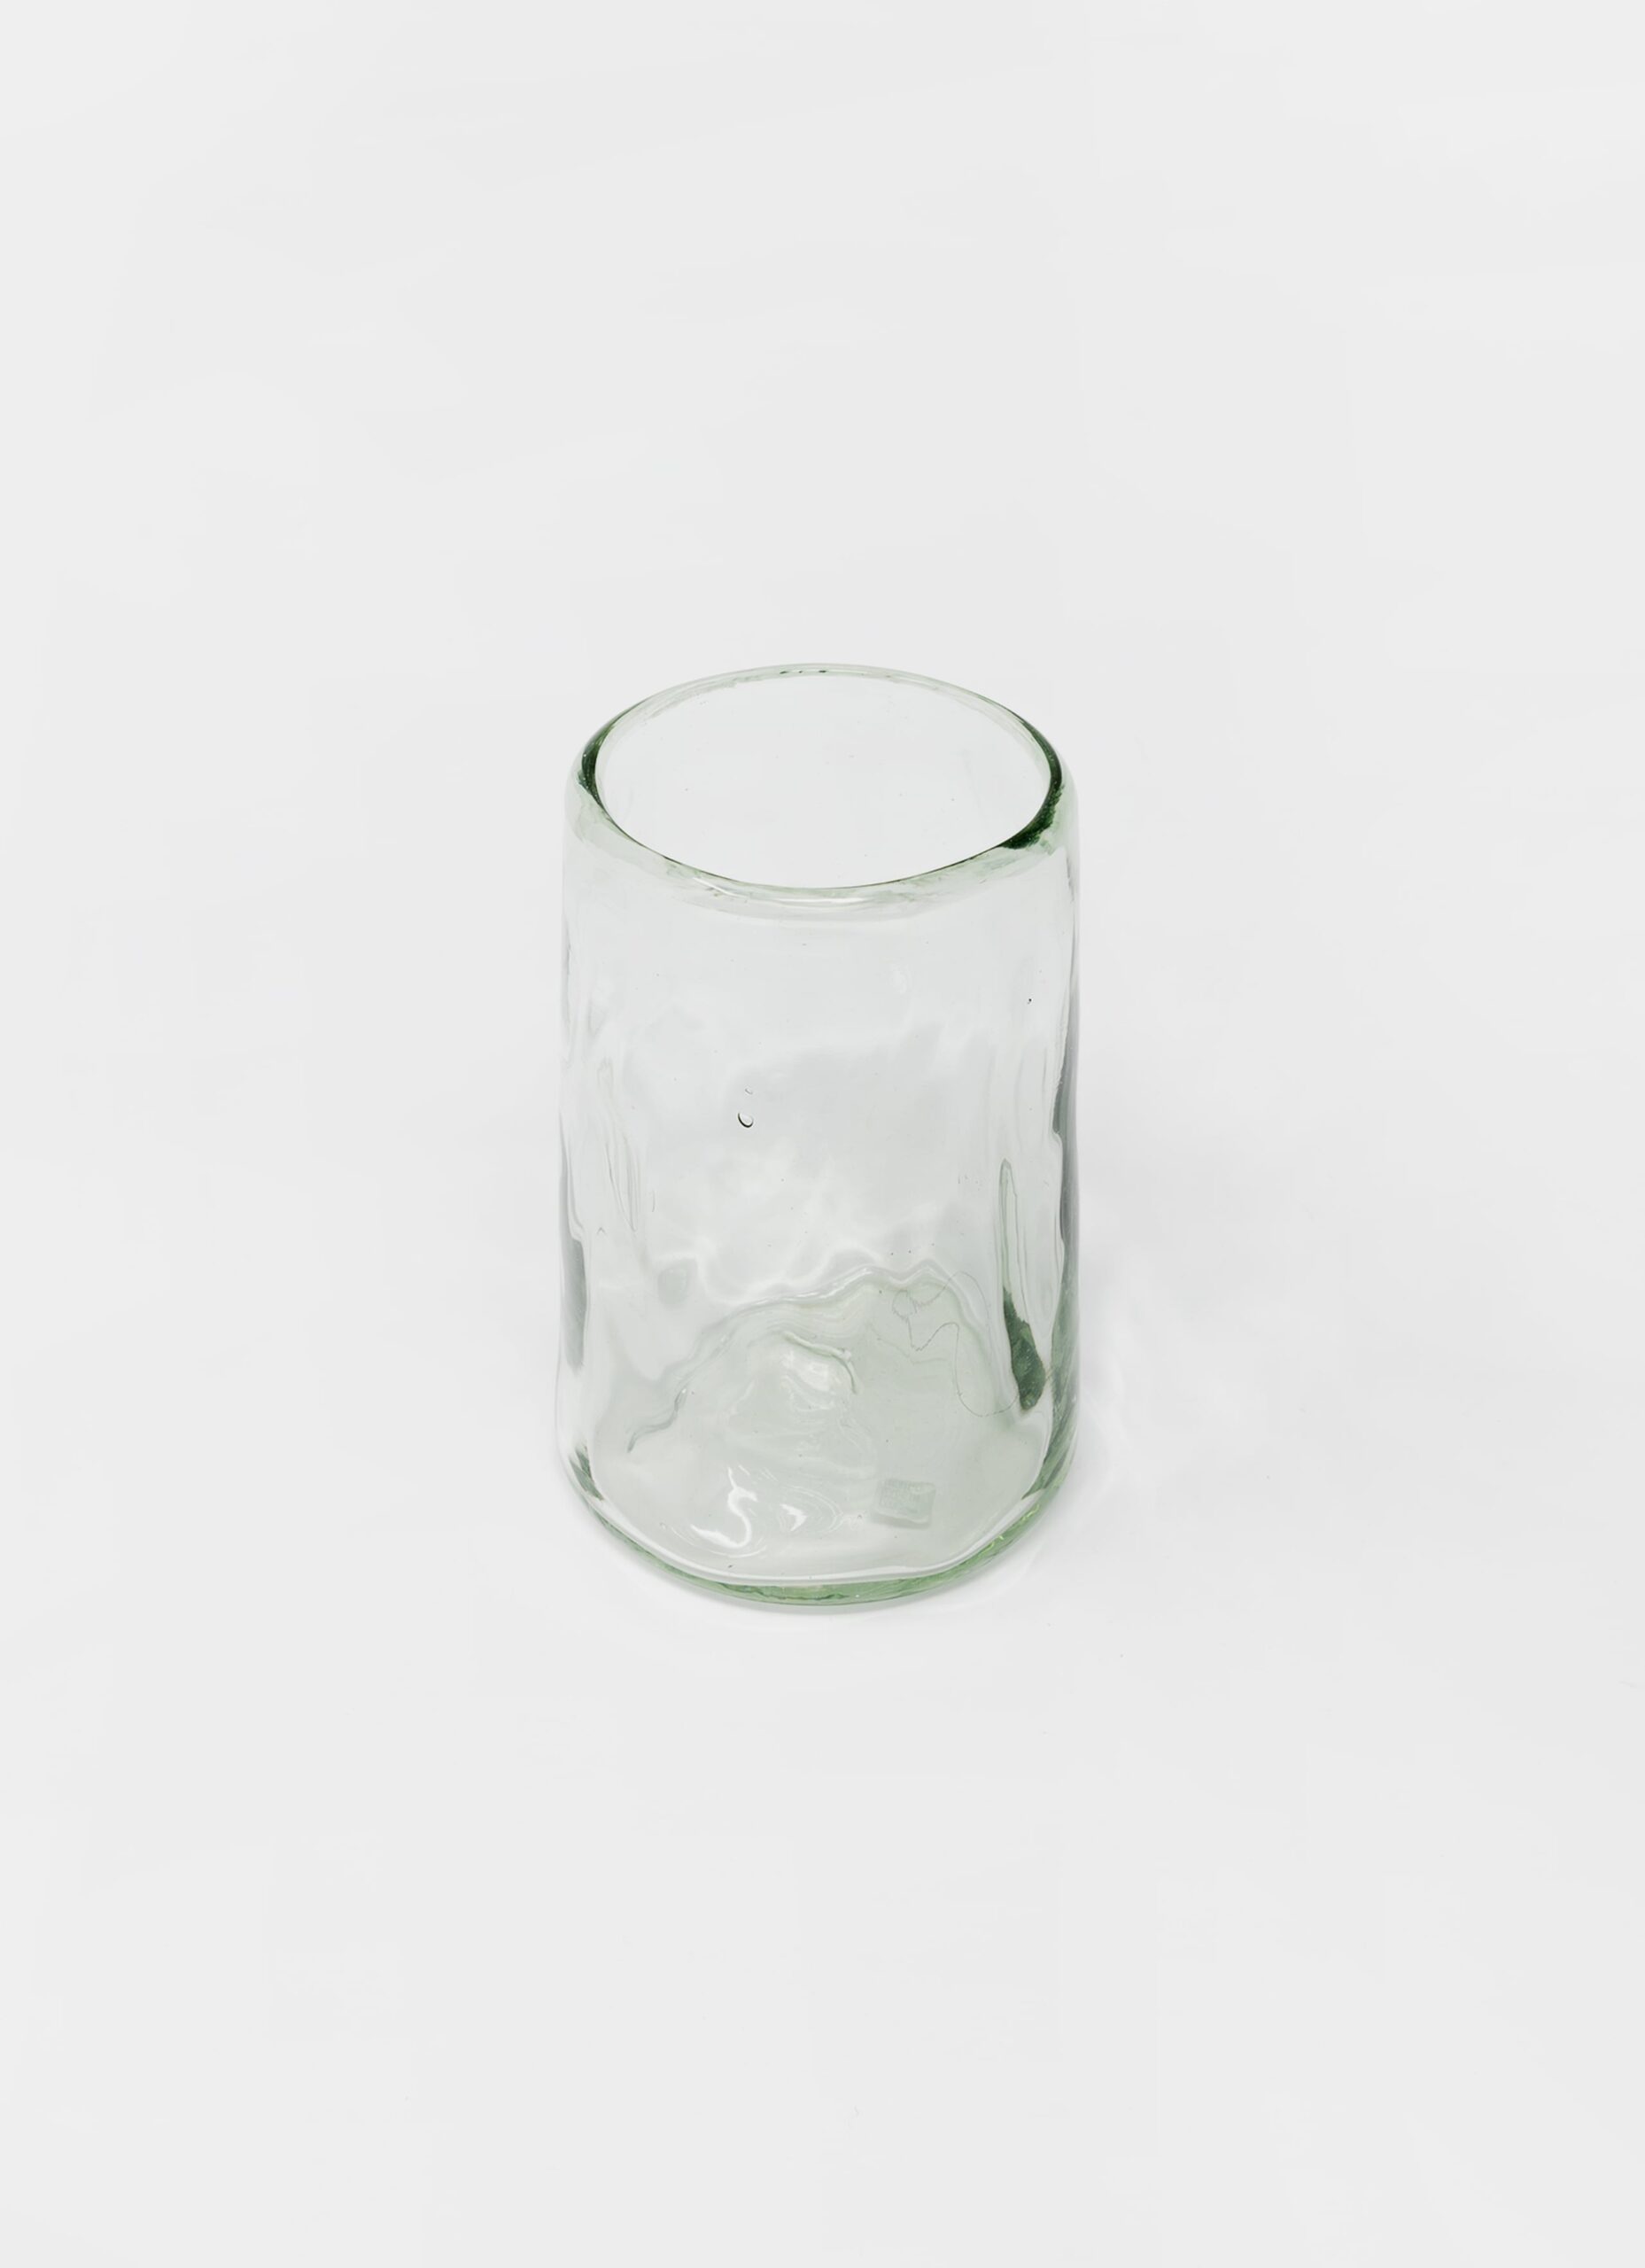 La Muerte Tiene Permiso - White Lights of Mexico City- Handblown Recycled Glass - Highball Glass Tumbler